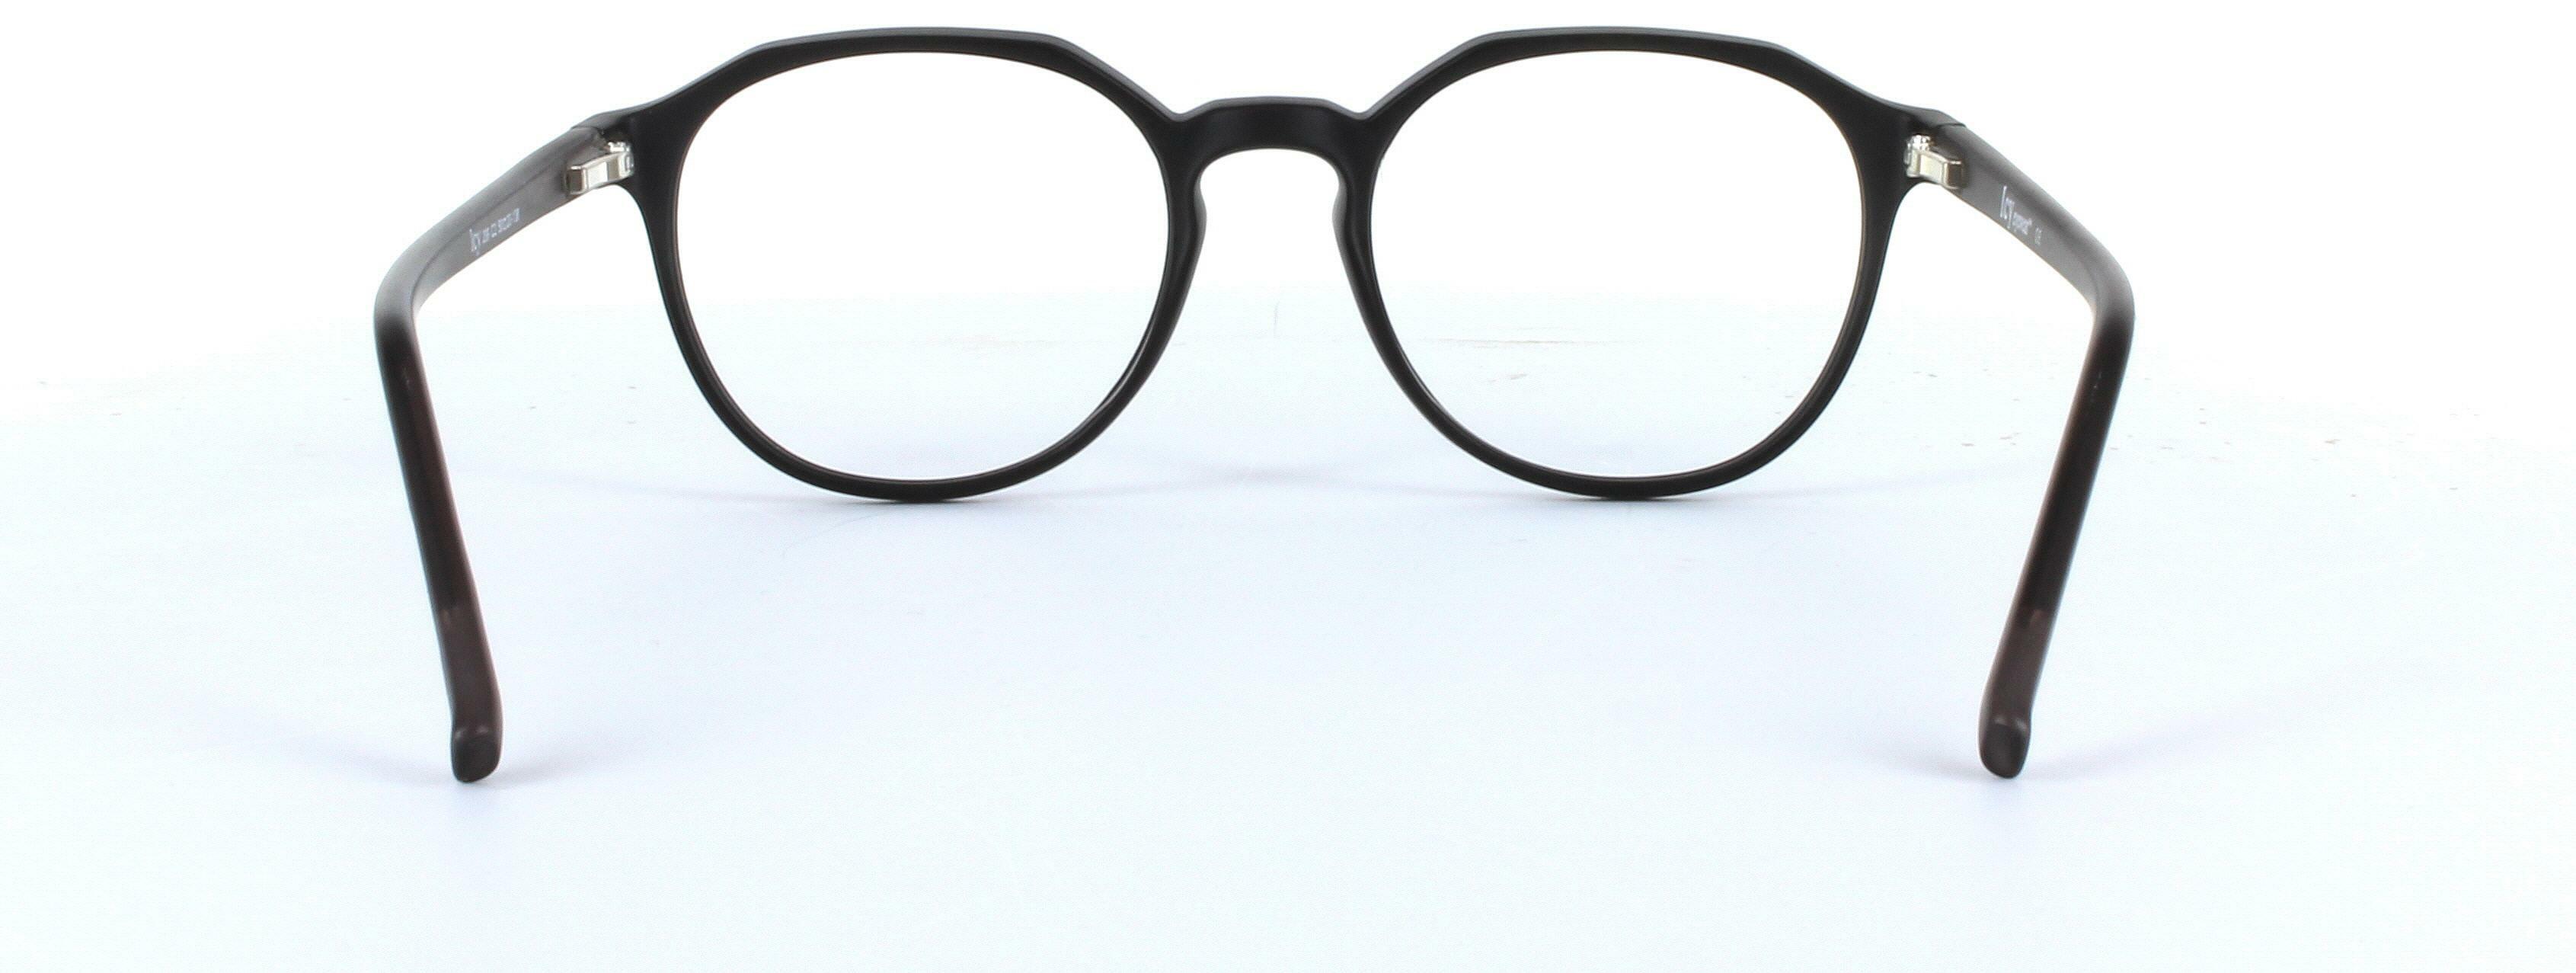 Jango Black Full Rim Round Plastic Glasses - Image View 3